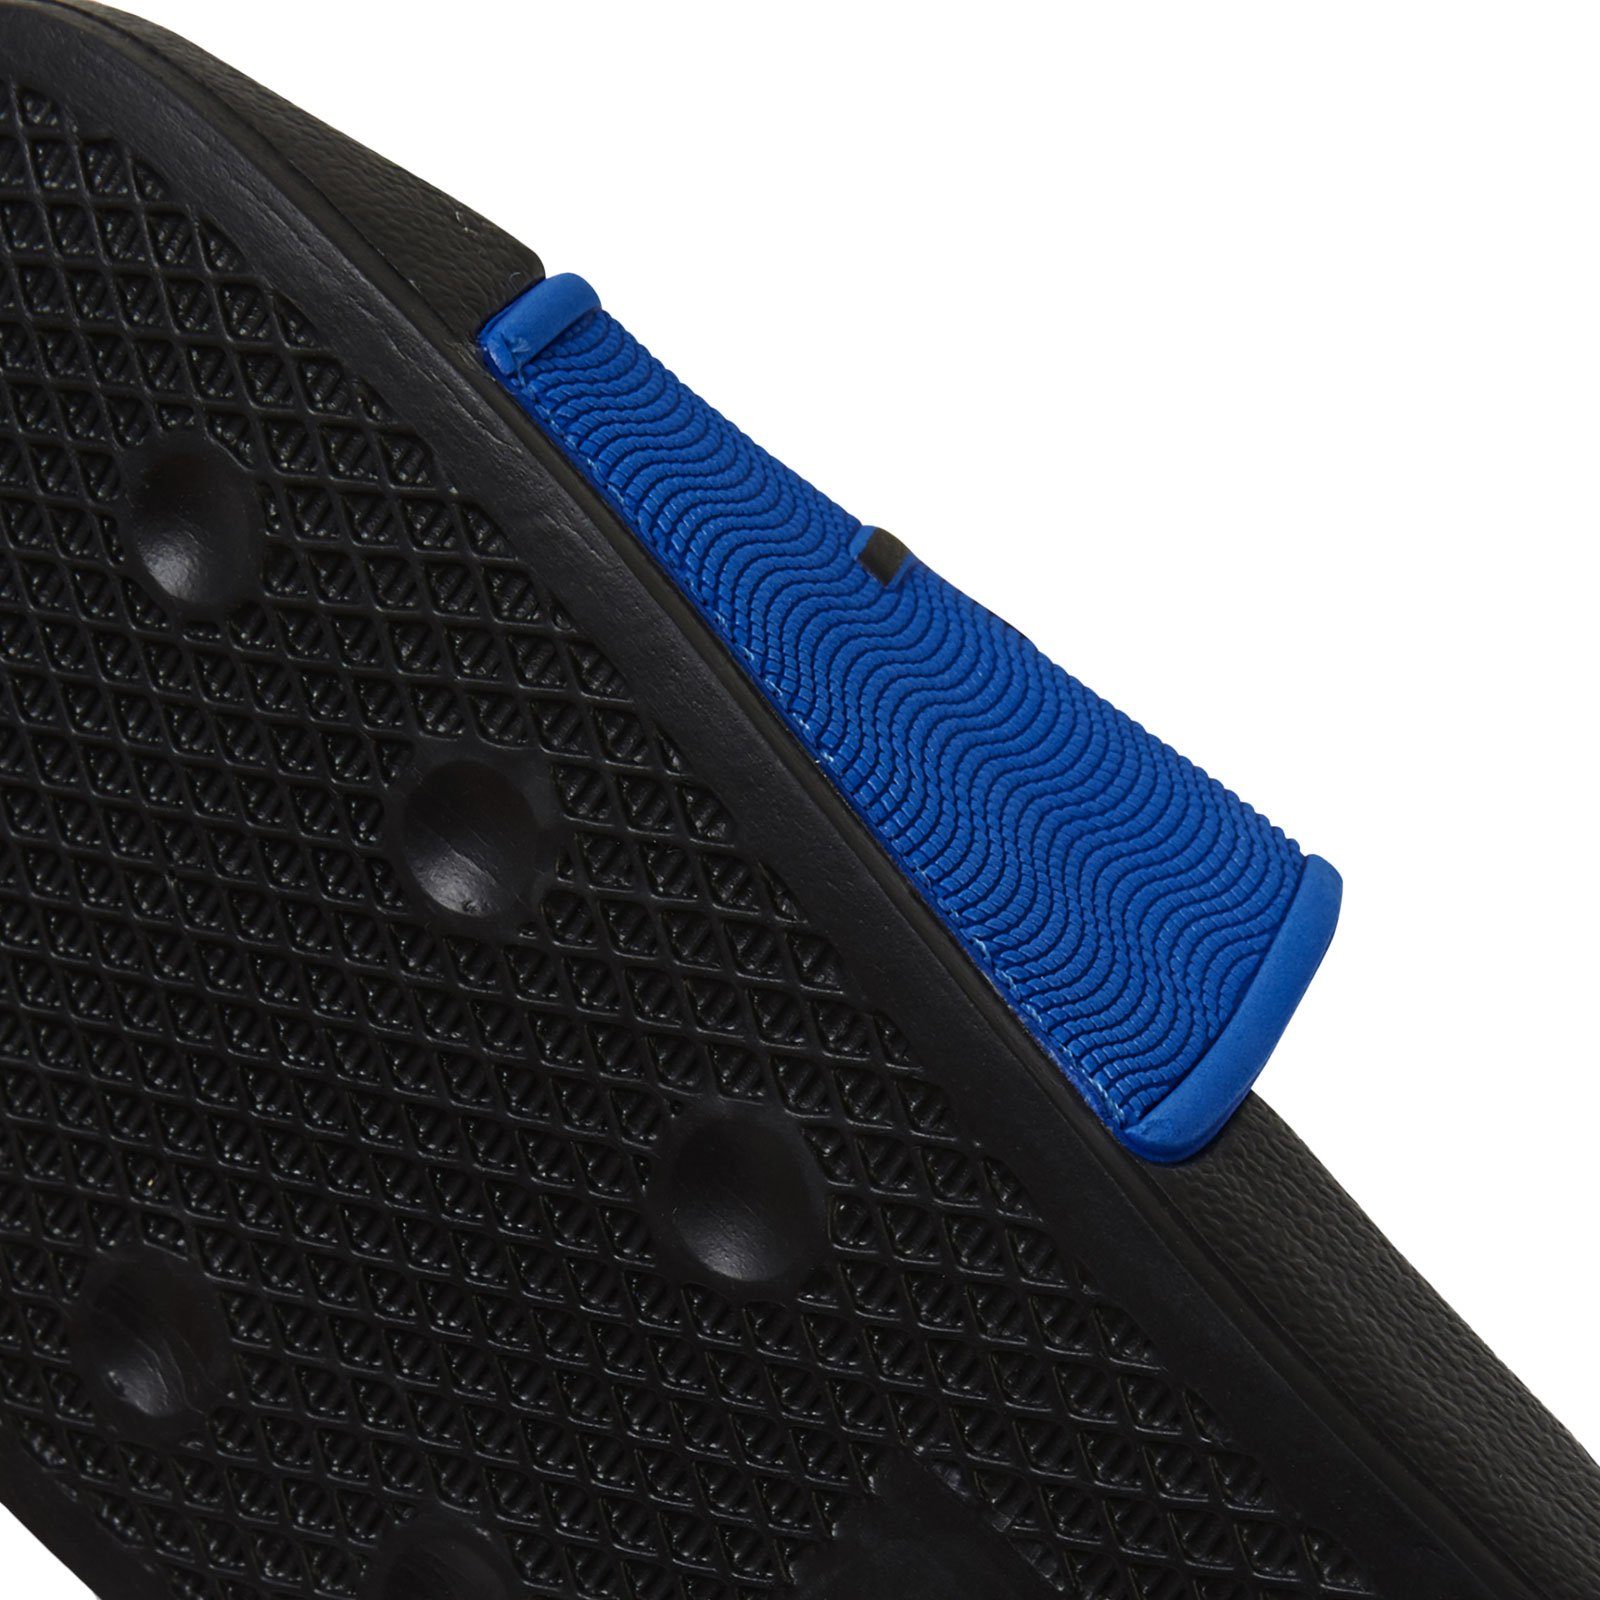 O'Neill Logo Slides 15045 Badeschuh vorgeformten blue princess mit Fußbett